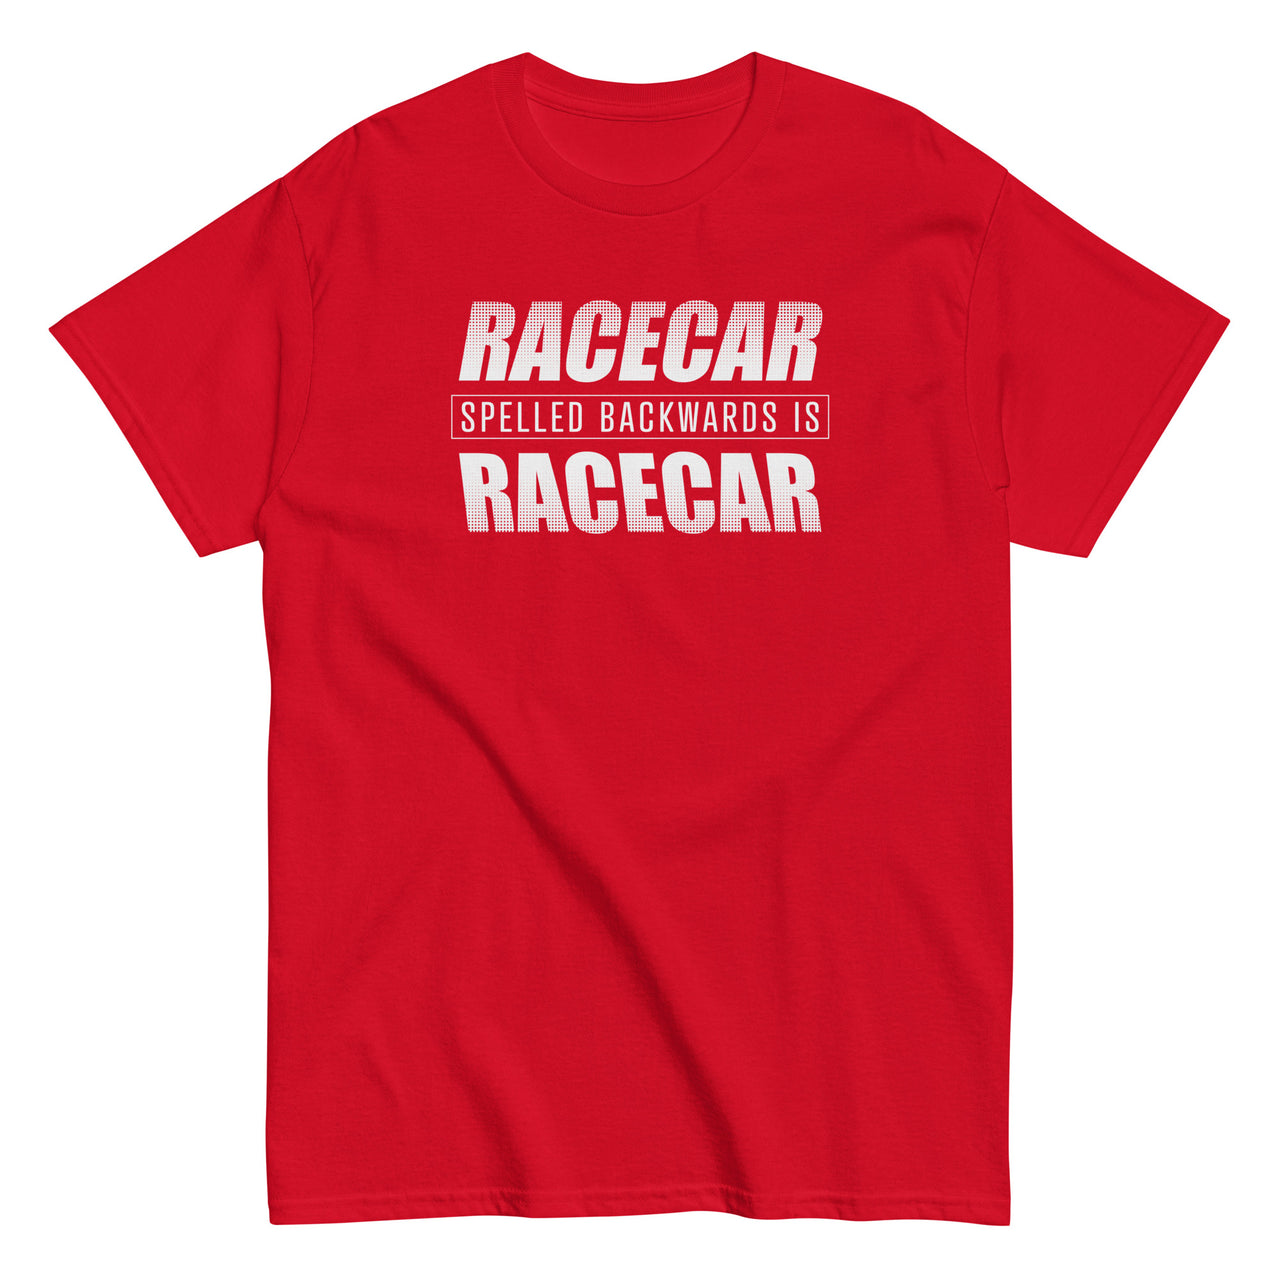 Funny Racecar Shirt, Car Enthusiast Gift, Drag Racing, or Racecar T-Shirt in red